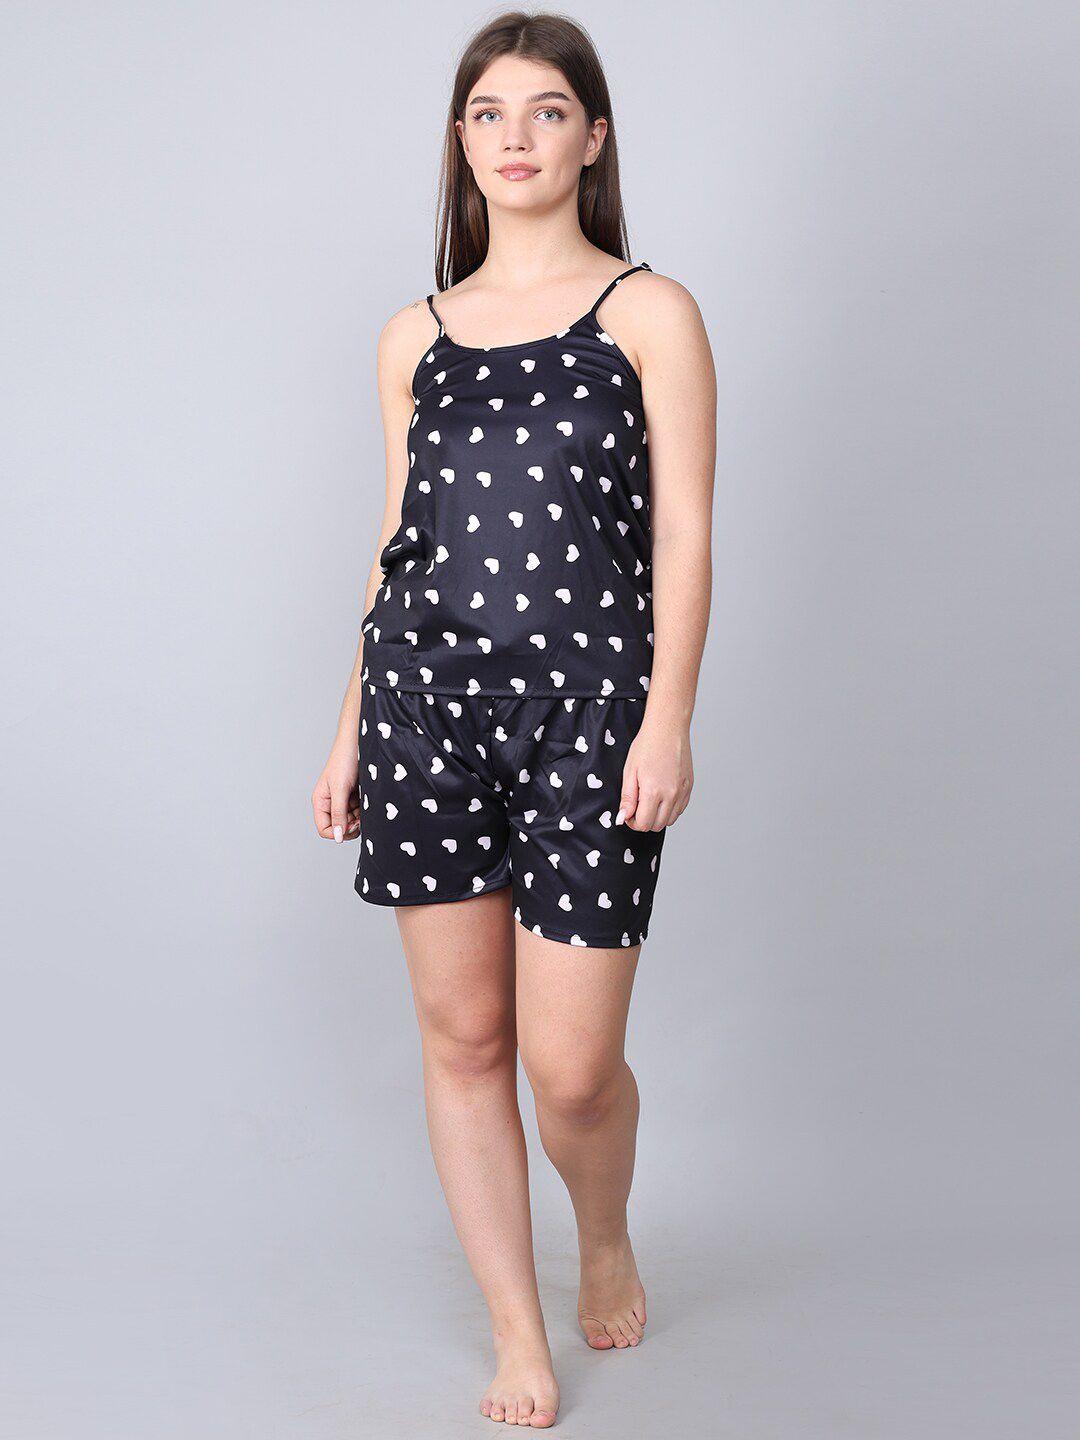 xpiox polka dots printed night suit